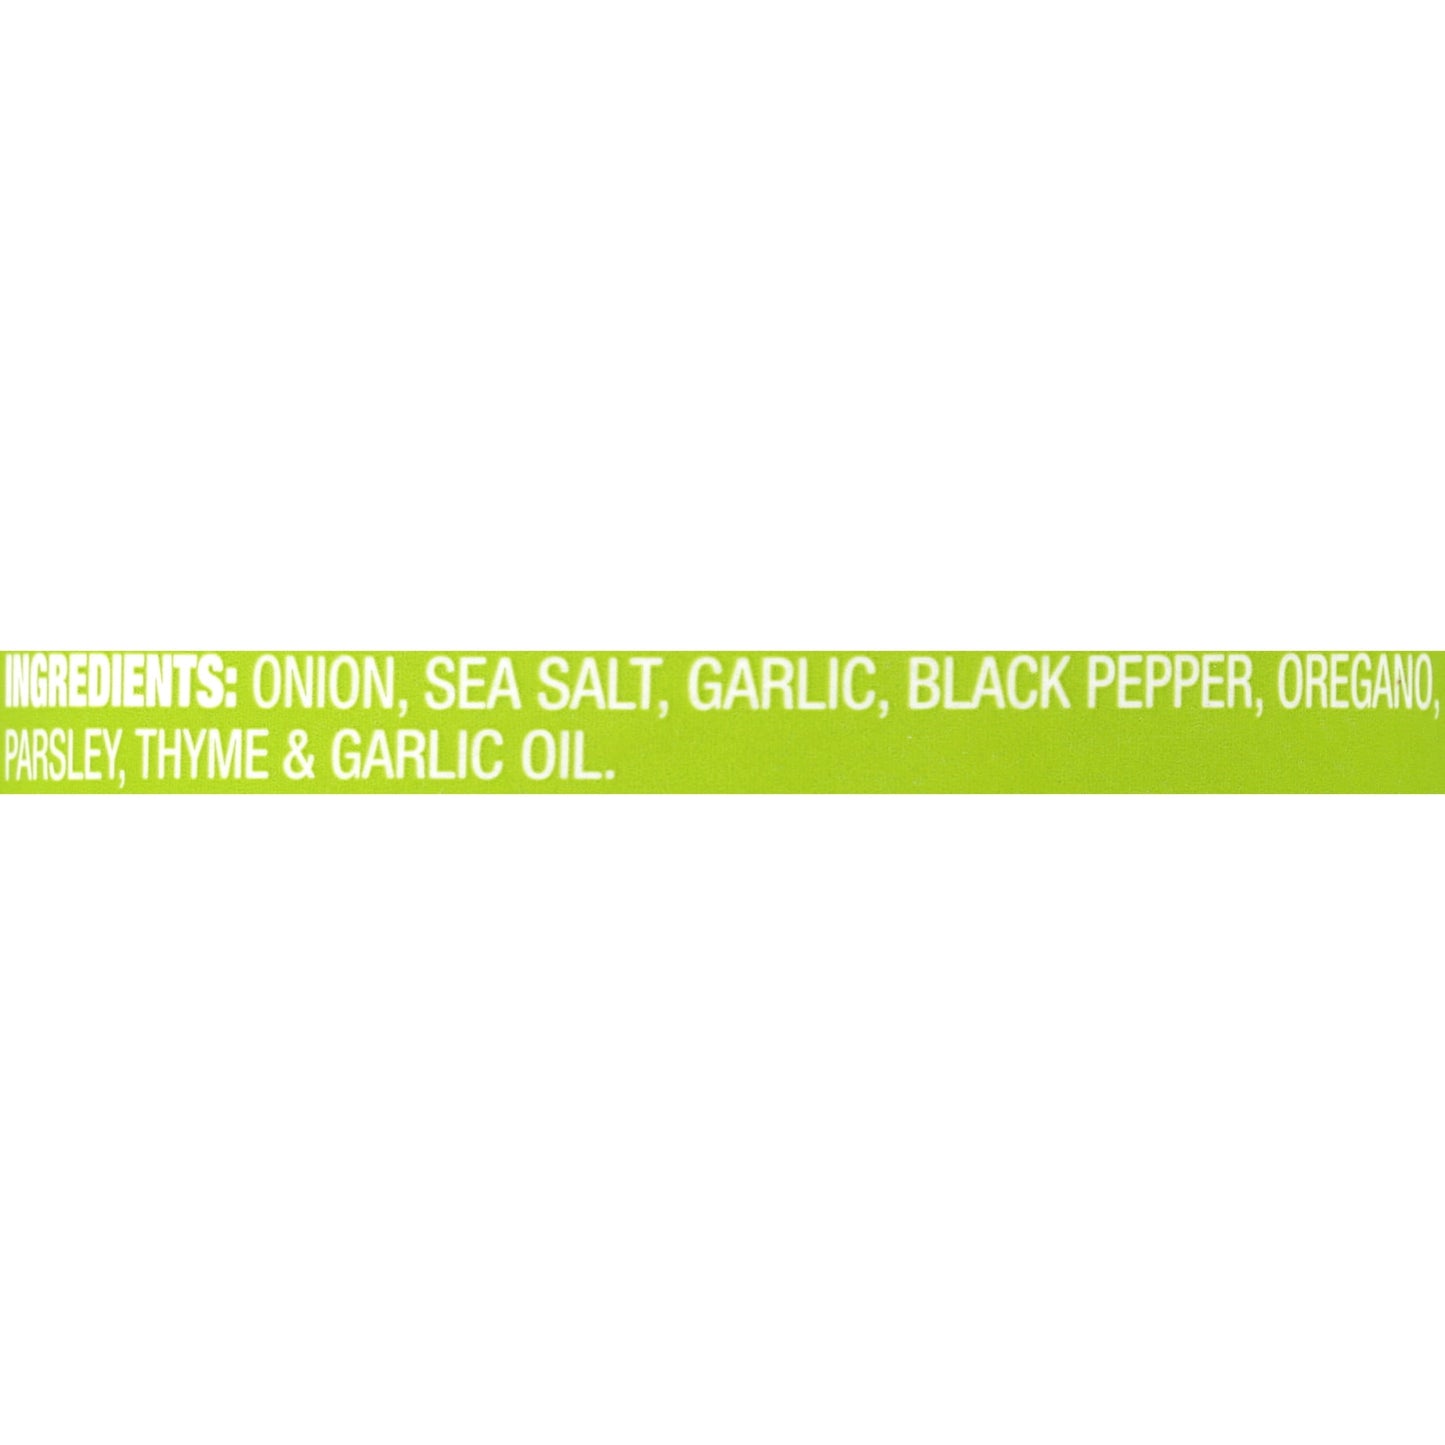 McCormick Garlic, Herb and Black Pepper and Sea Salt All Purpose Seasoning, 4.37 oz Mixed Spices & Seasonings